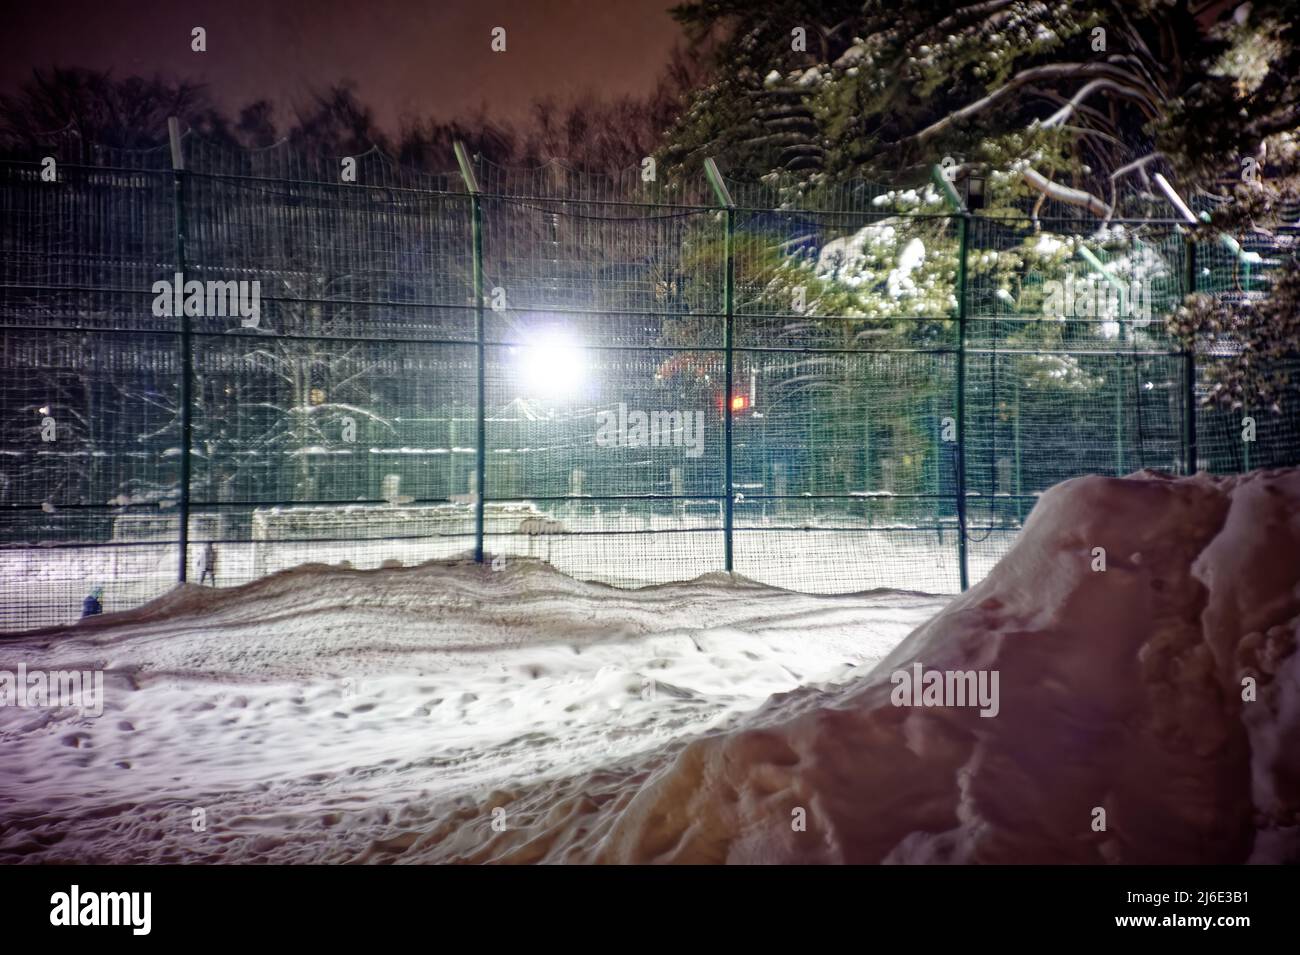 sports ground at night in winter, lomogafia Stock Photo